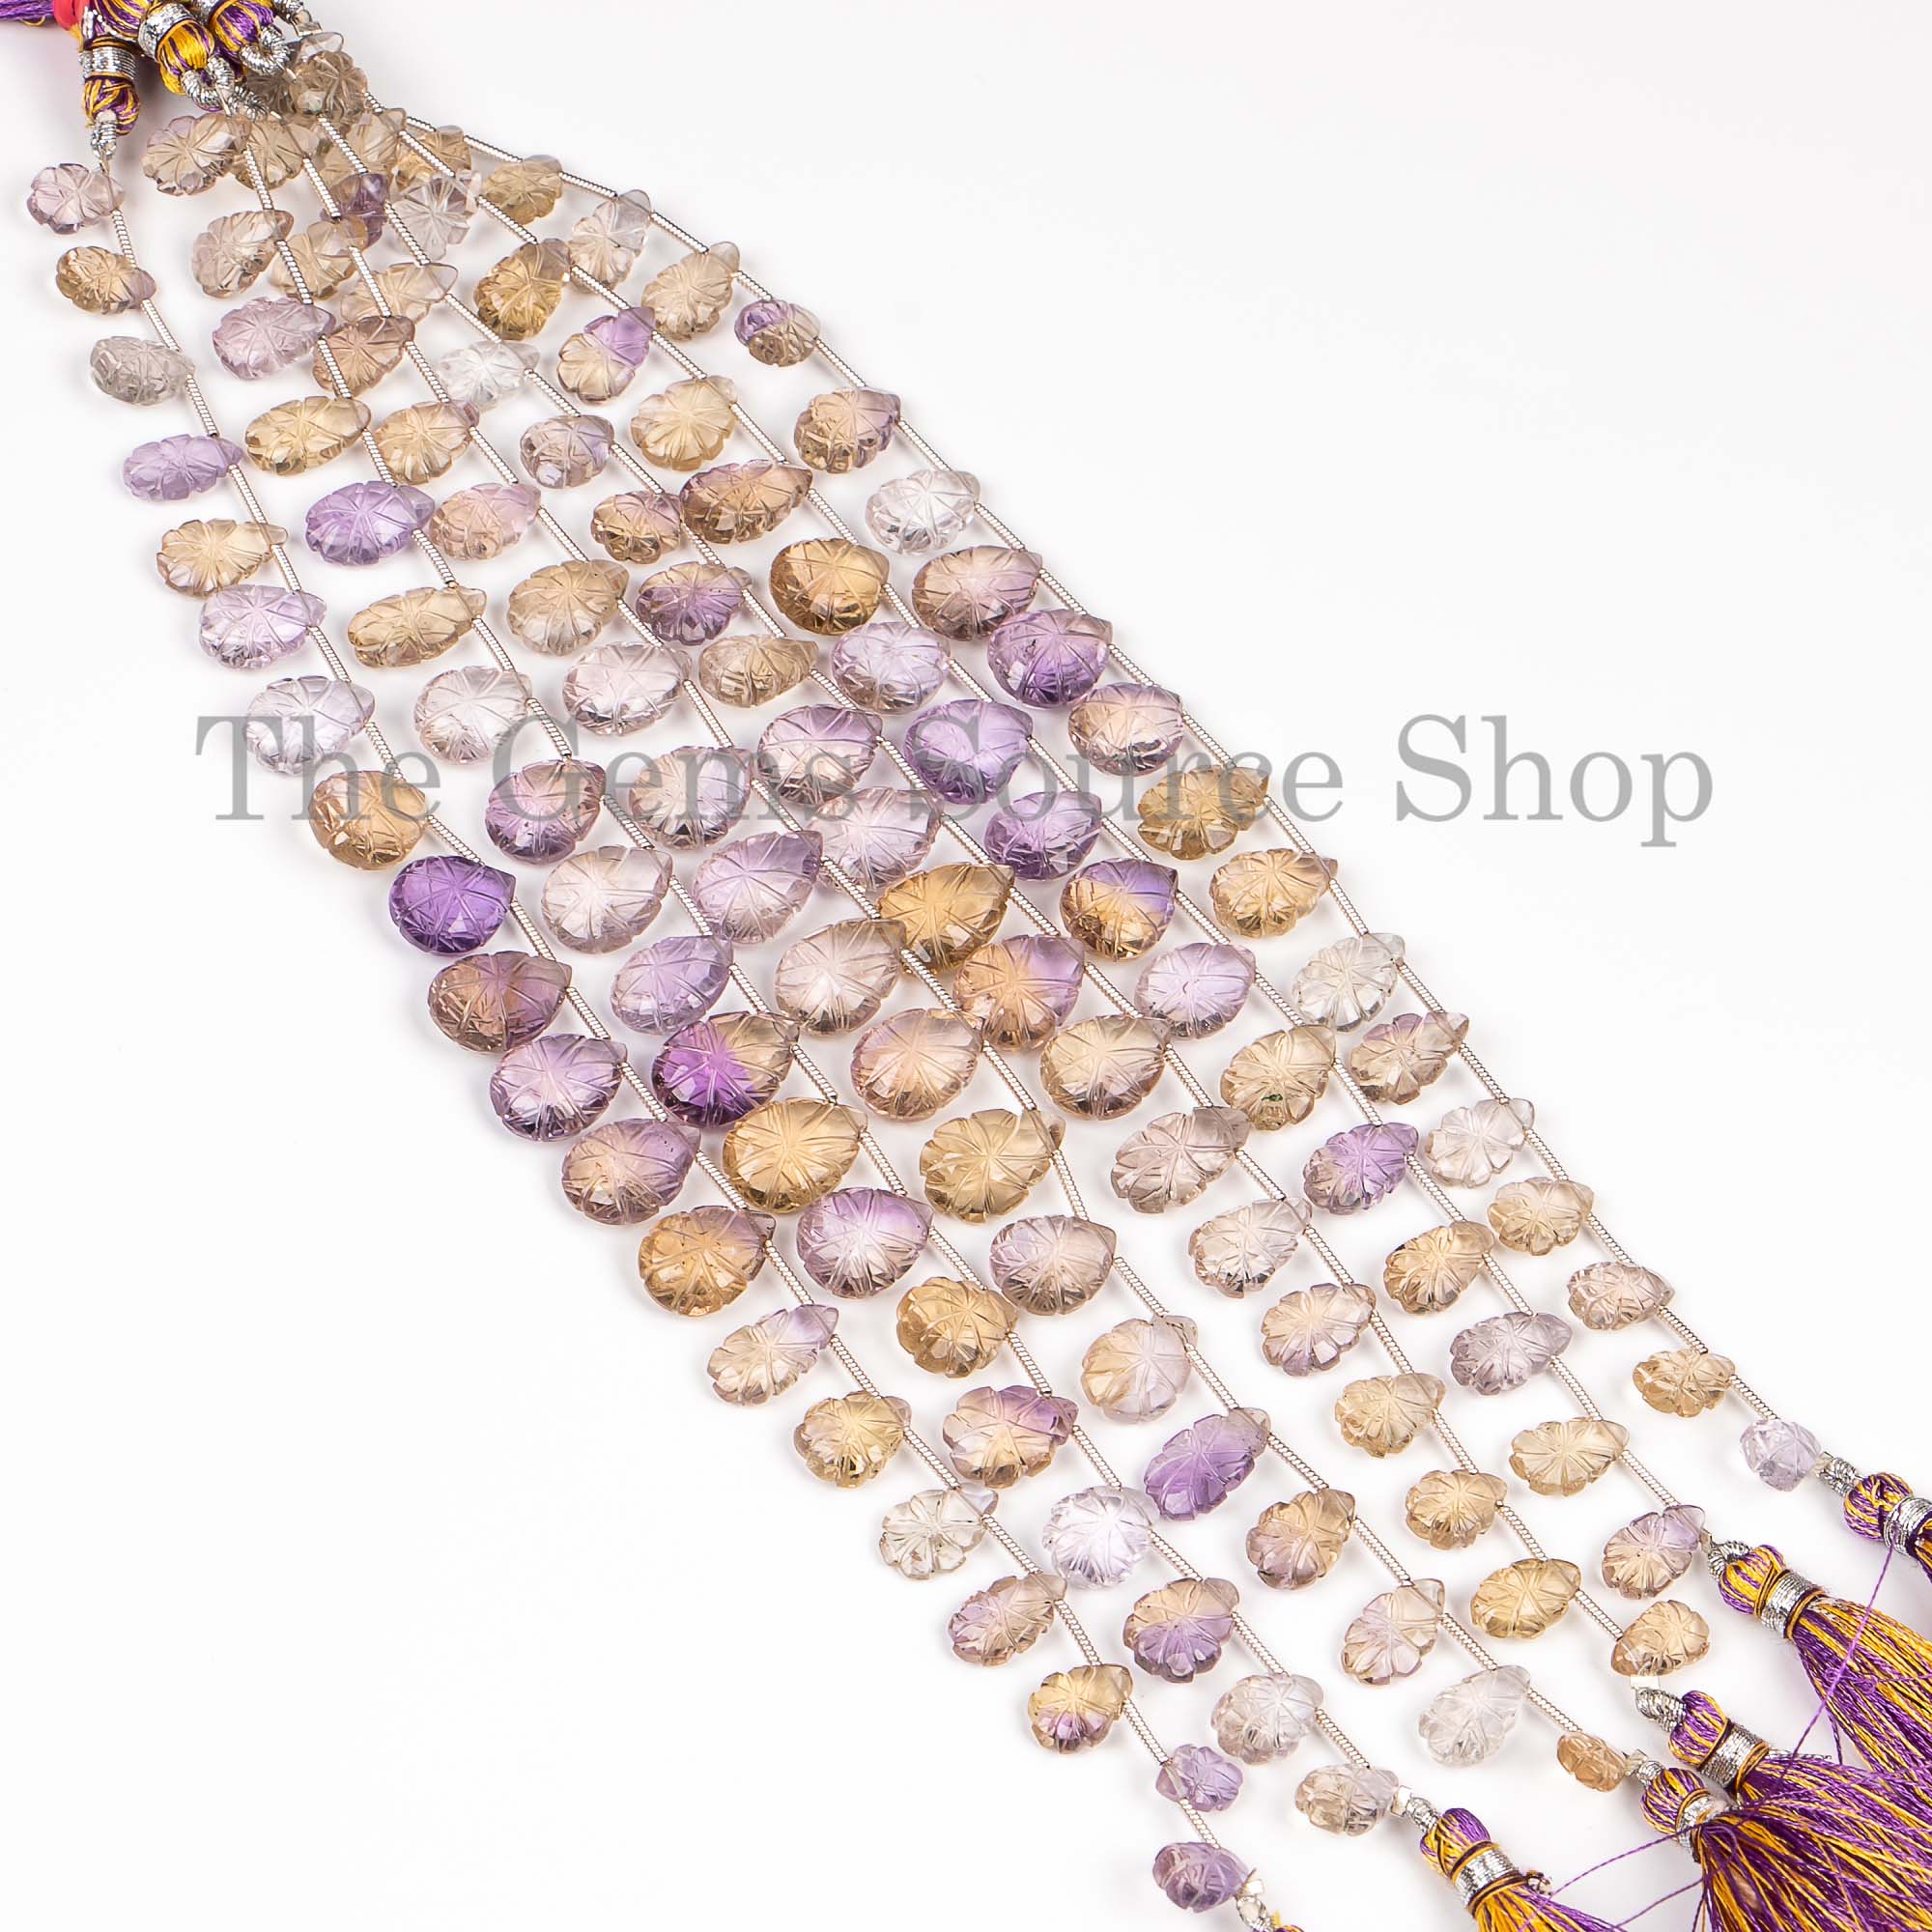 Natural Ametrine Pear Shape Flower Carving Beads, Ametrine Pear Carving Beads